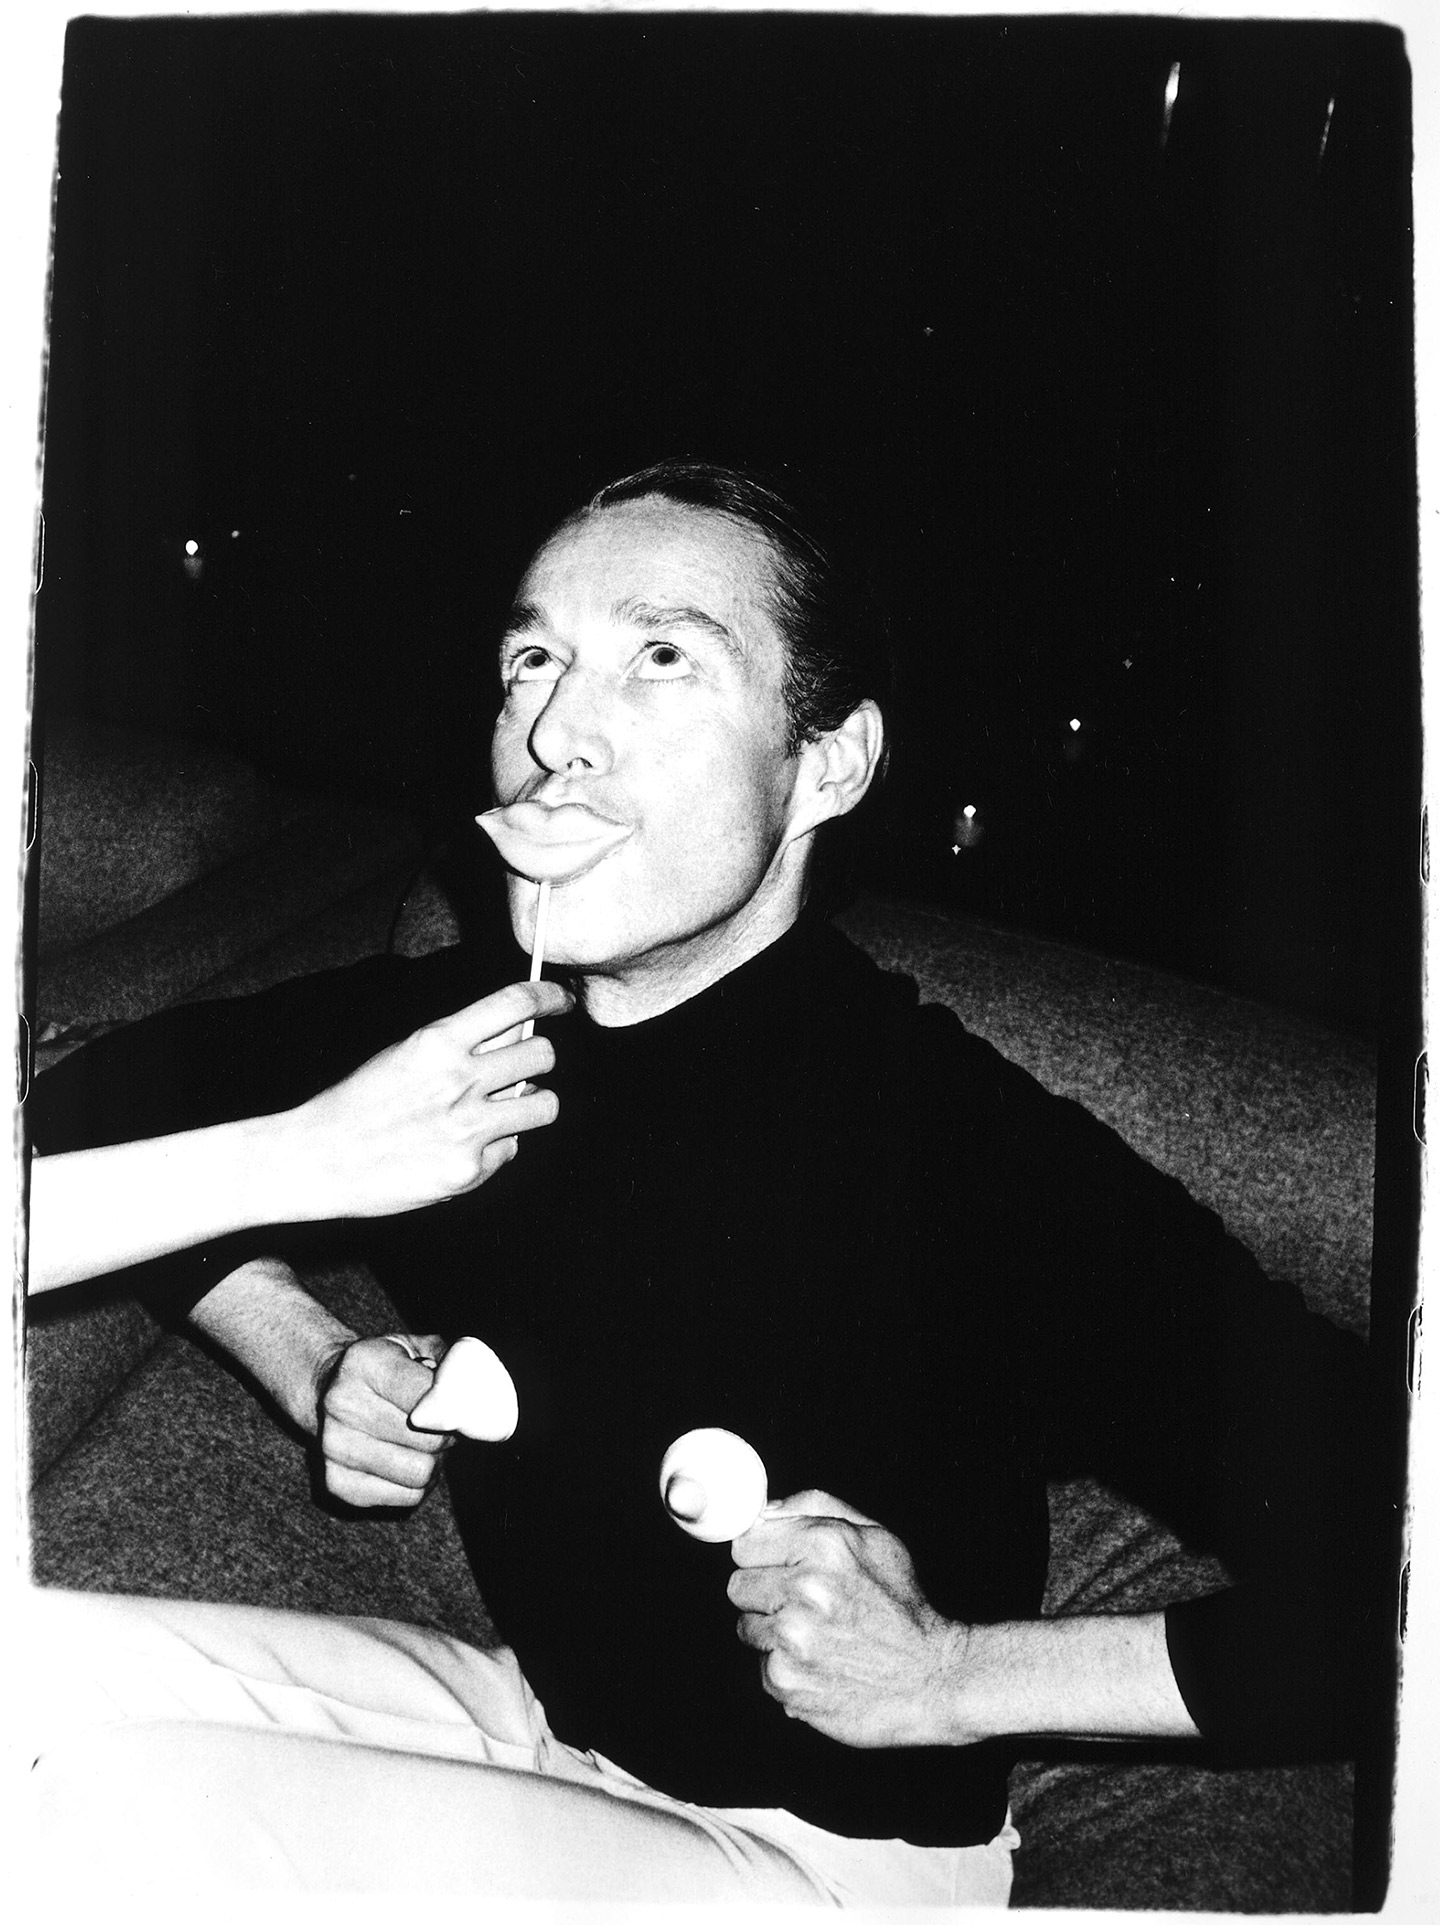 Andy Warhol photographs